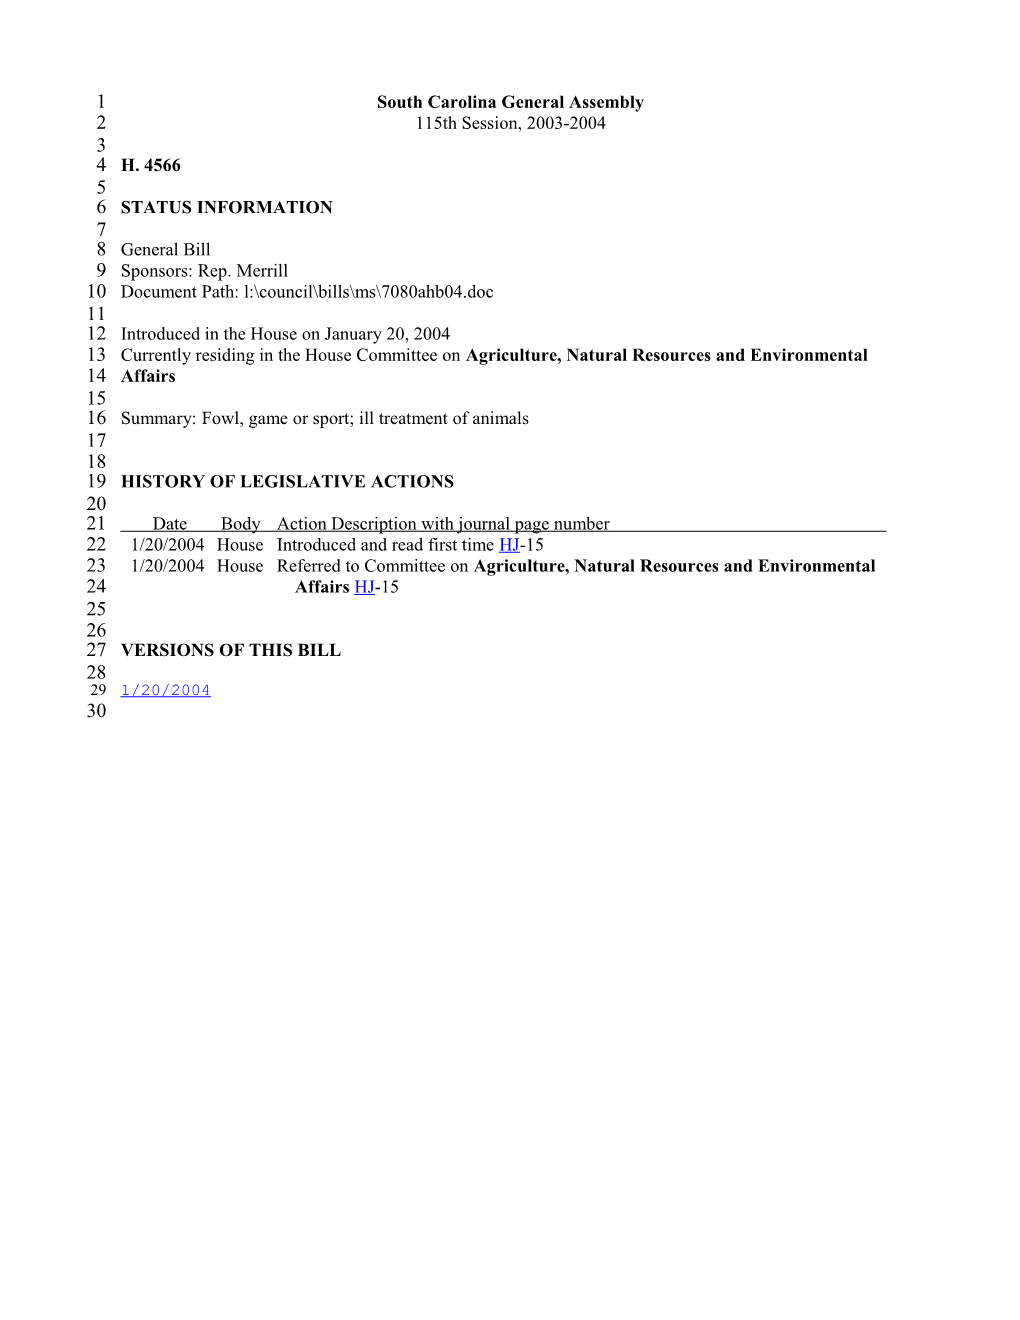 2003-2004 Bill 4566: Fowl, Game Or Sport; Ill Treatment of Animals - South Carolina Legislature